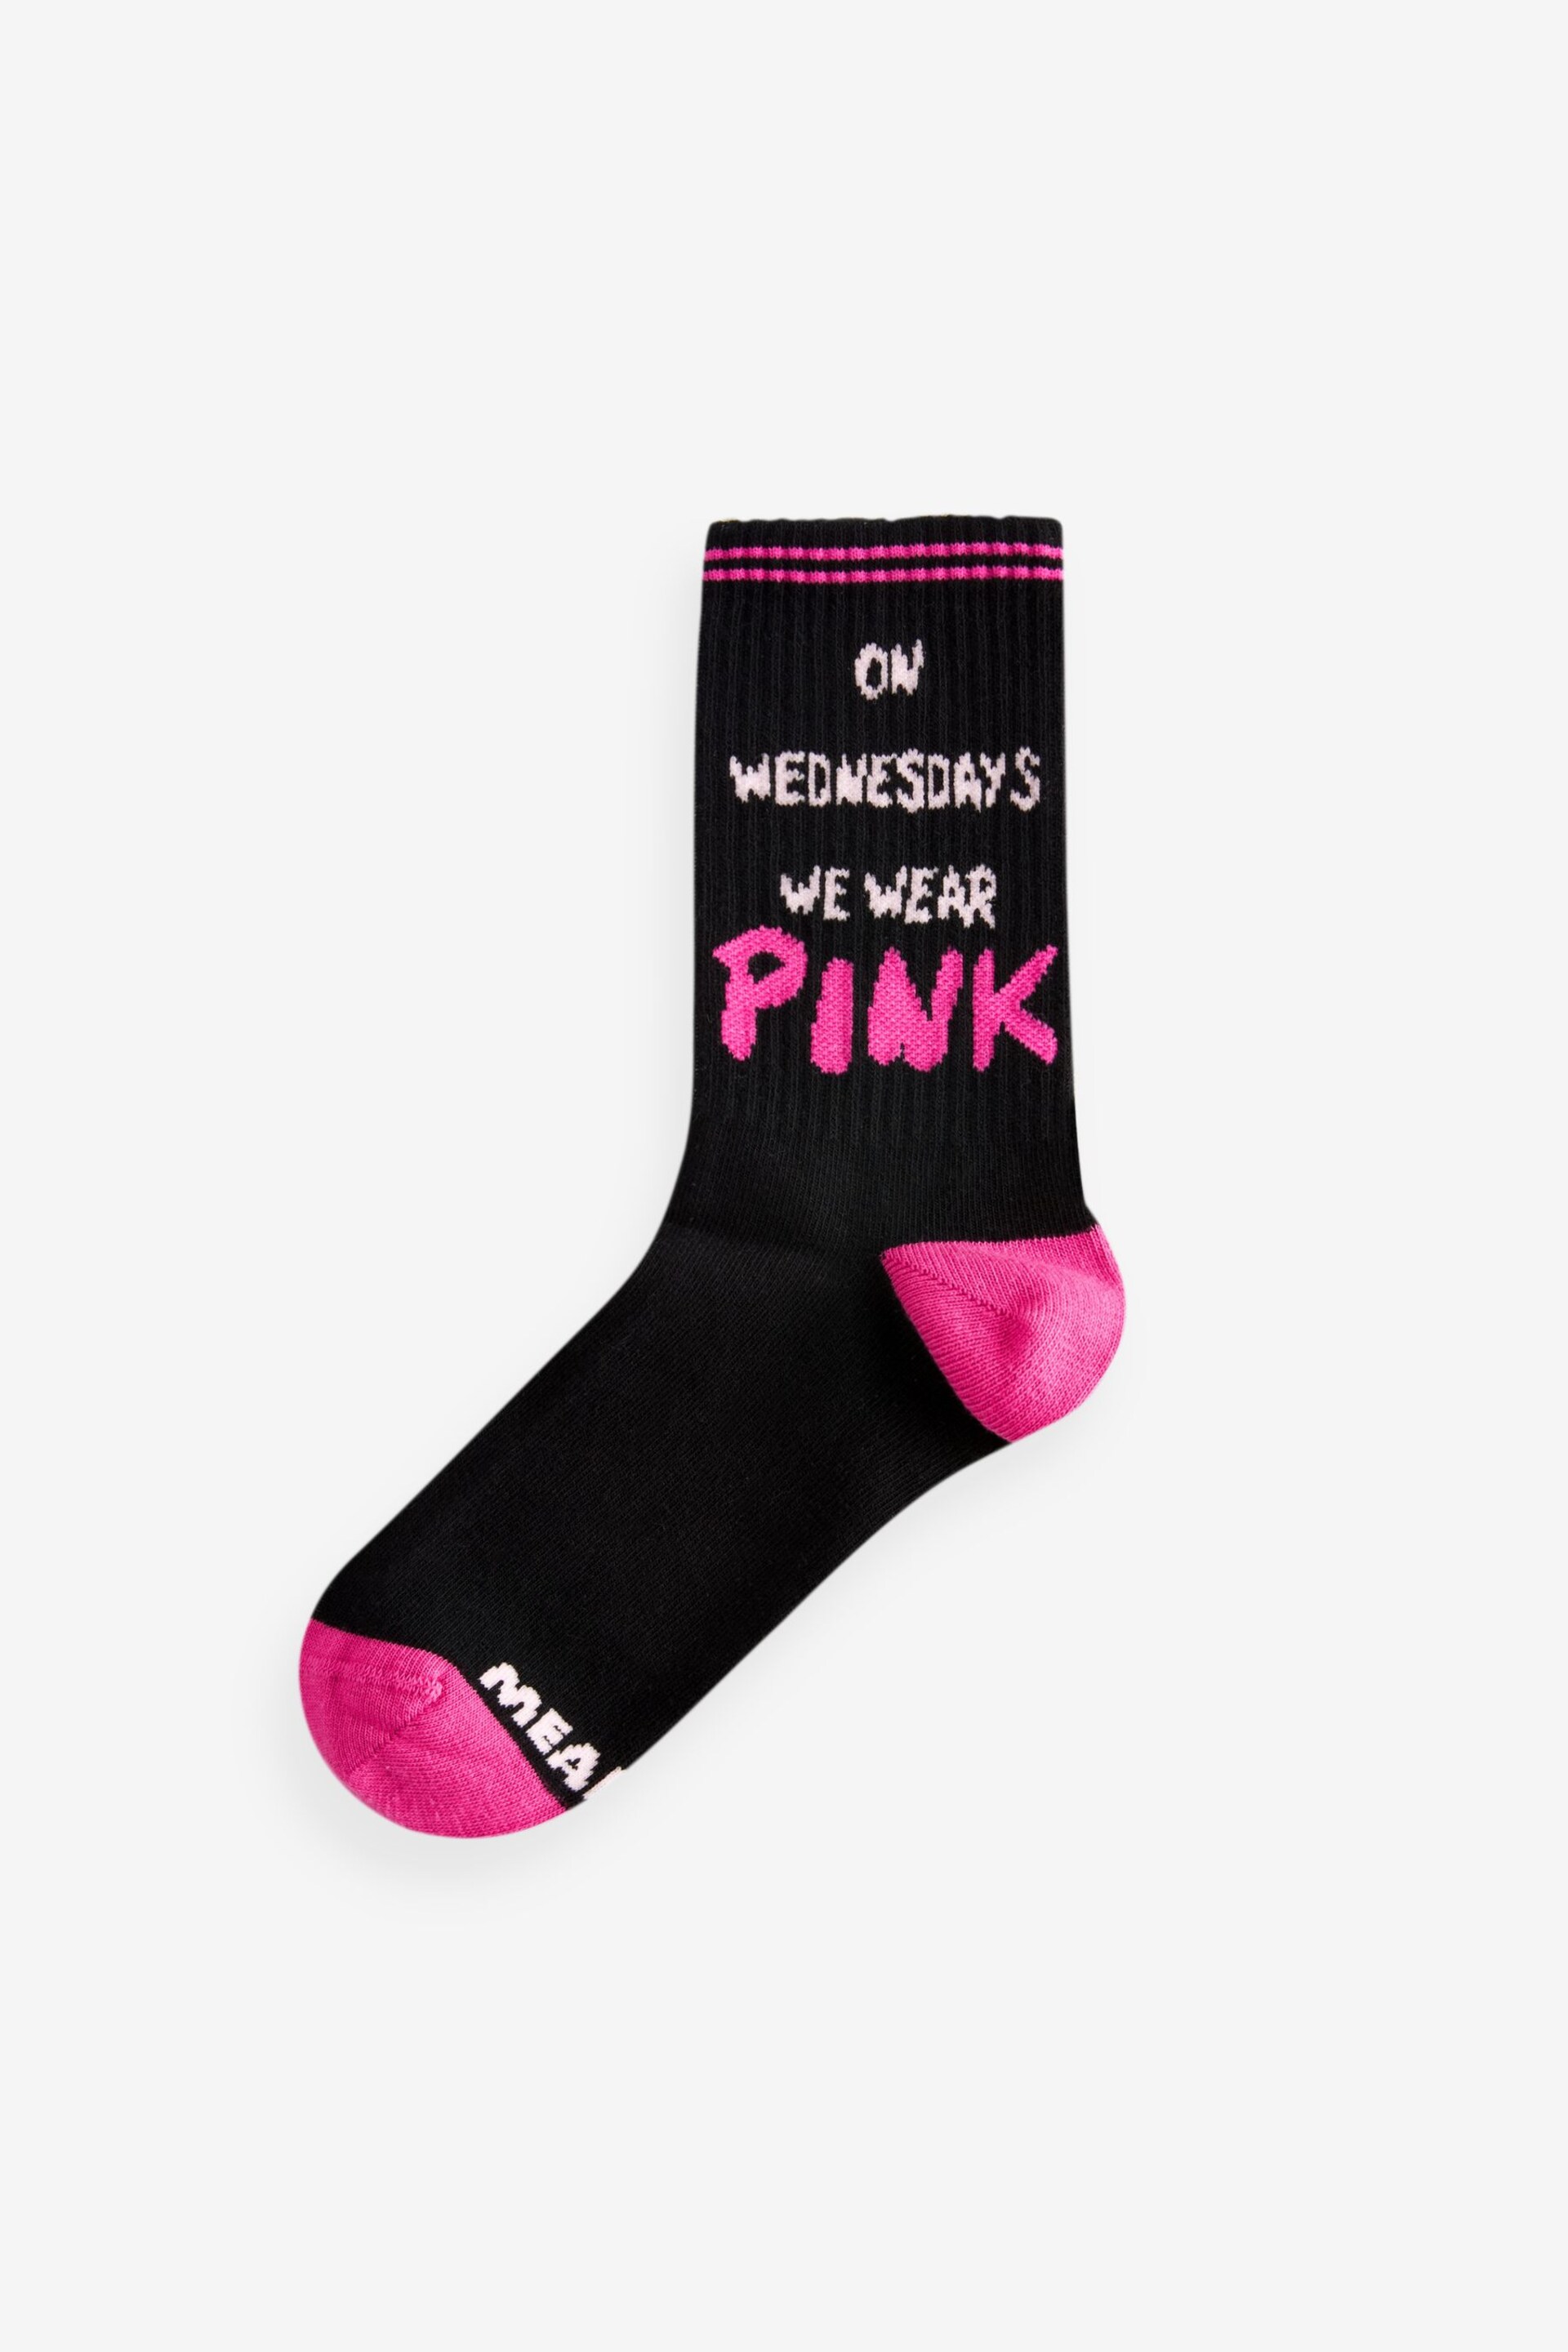 Pink/Black Mean Girls Ankle Socks 3 Pack - Image 3 of 5